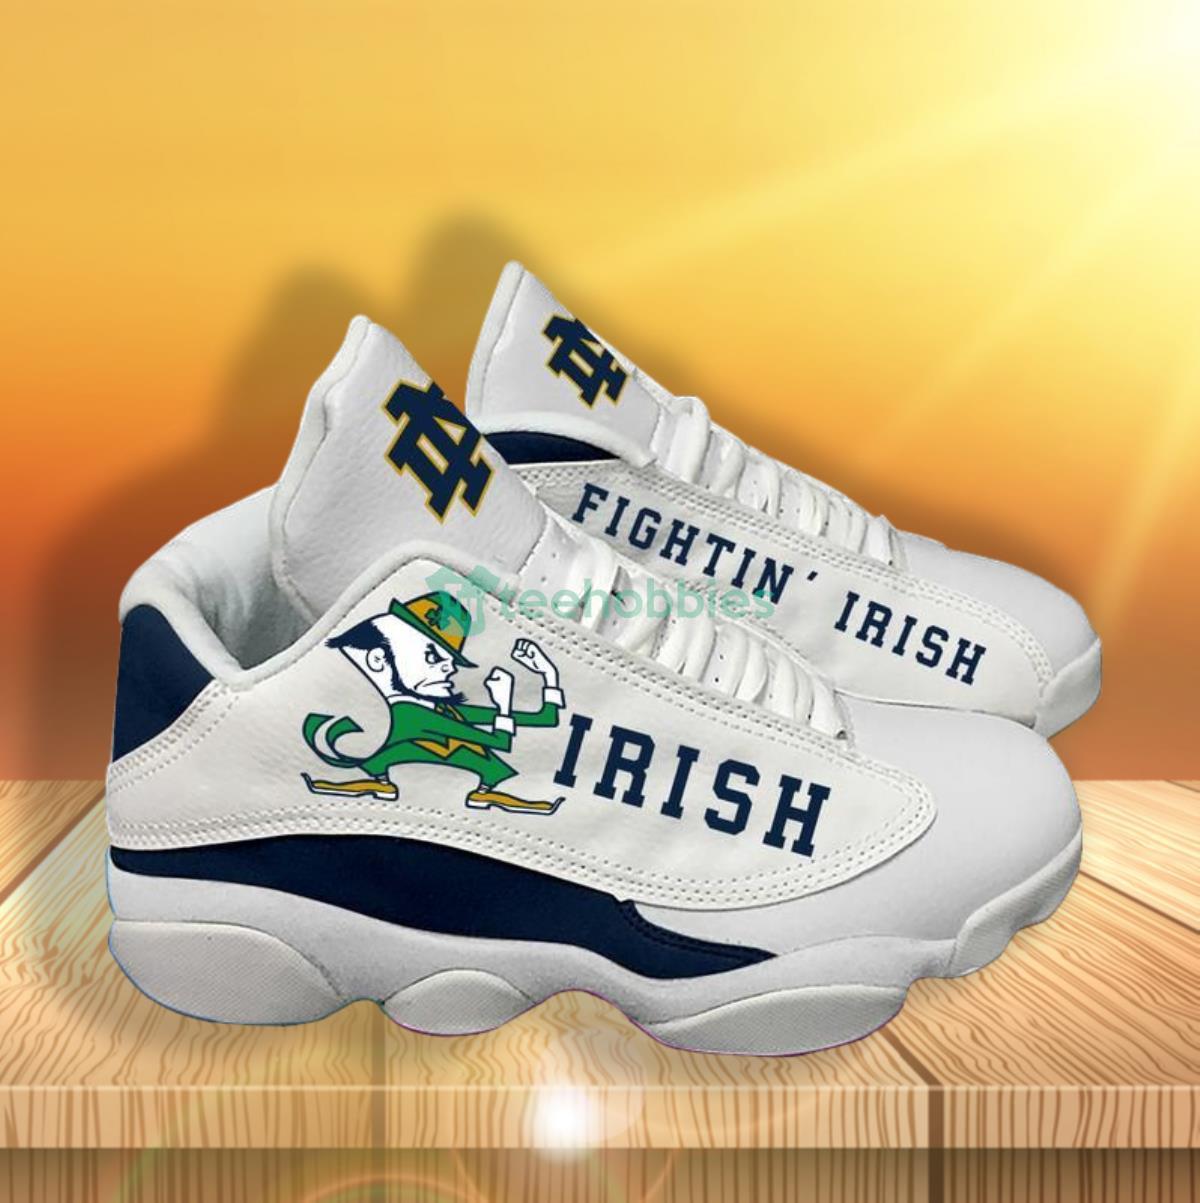 Notre Dame Fighting Irish Football Team Air Jordan 13 Shoes Running Casual Sneakers Product Photo 1